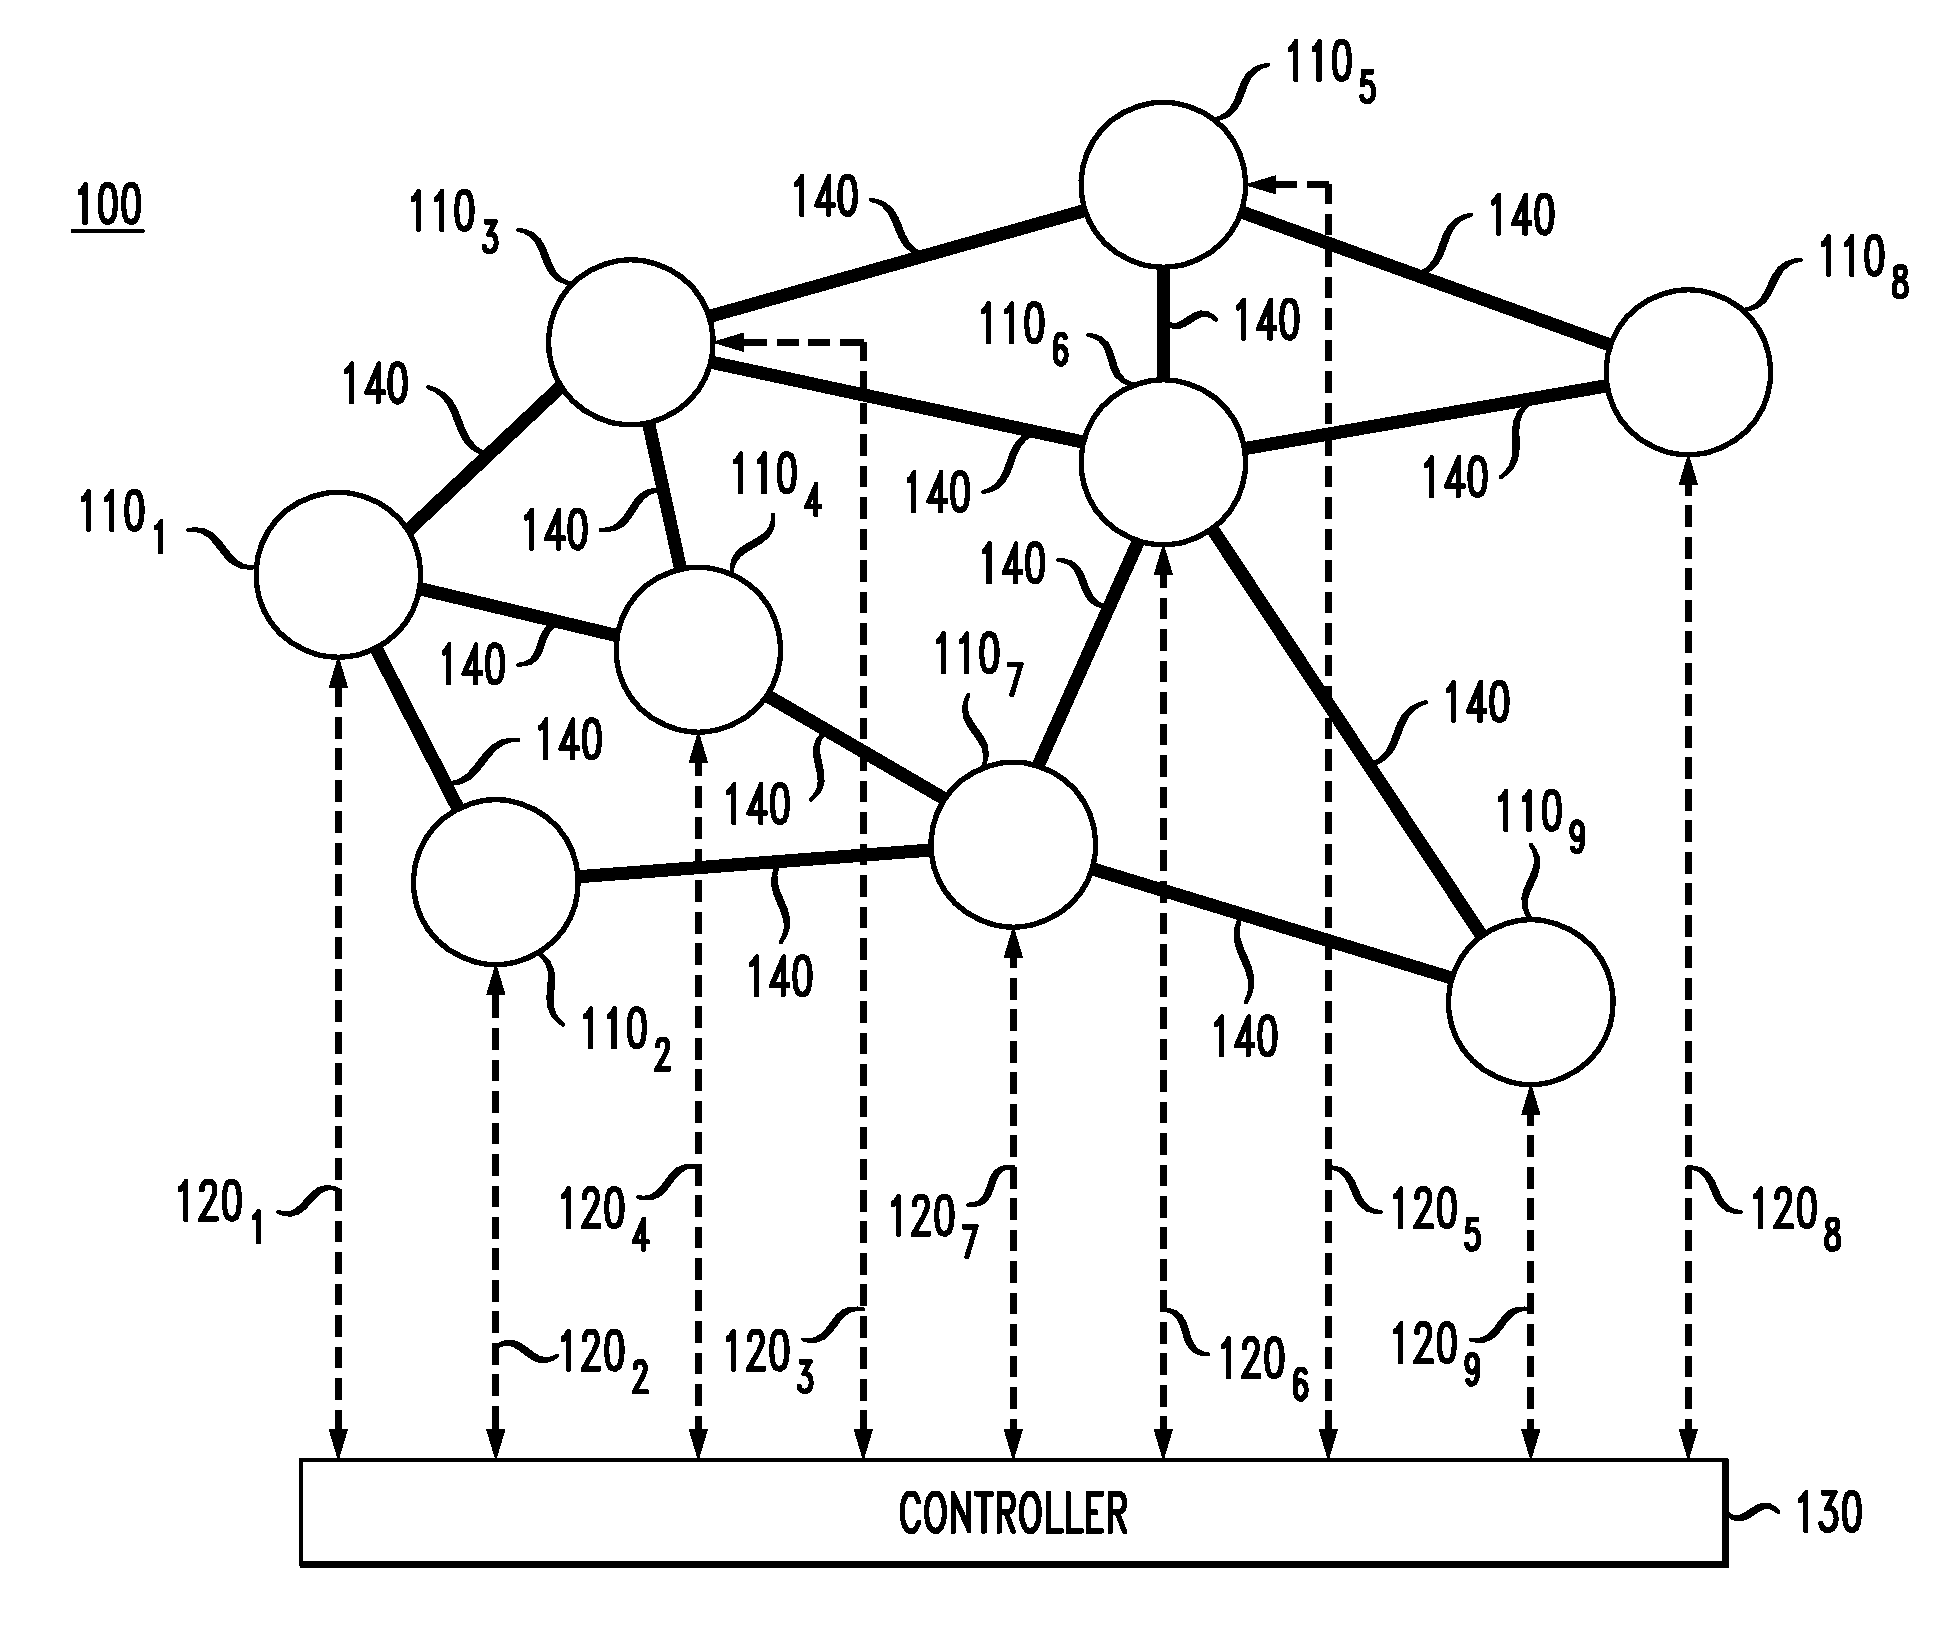 High-throughput routing in an optical network having a mesh topology